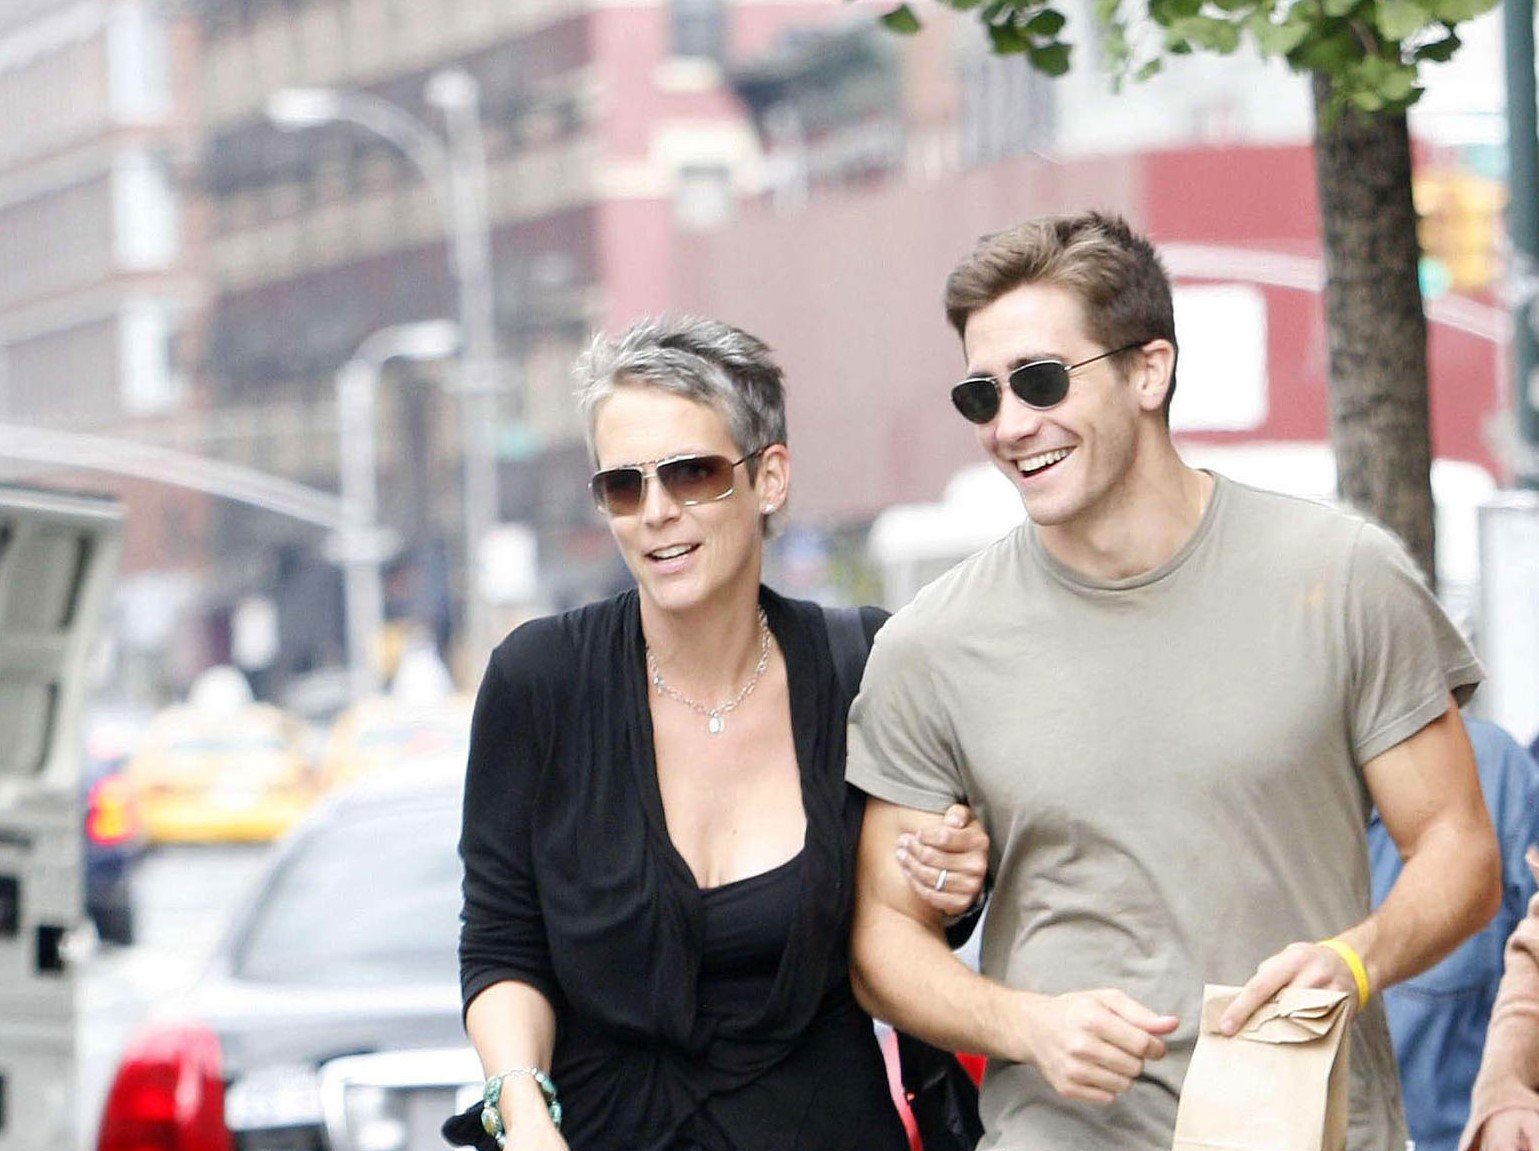 'Halloween' franchise star Jamie Lee Curtis and actor Jake Gyllenhaal walk together wearing sunglasses.